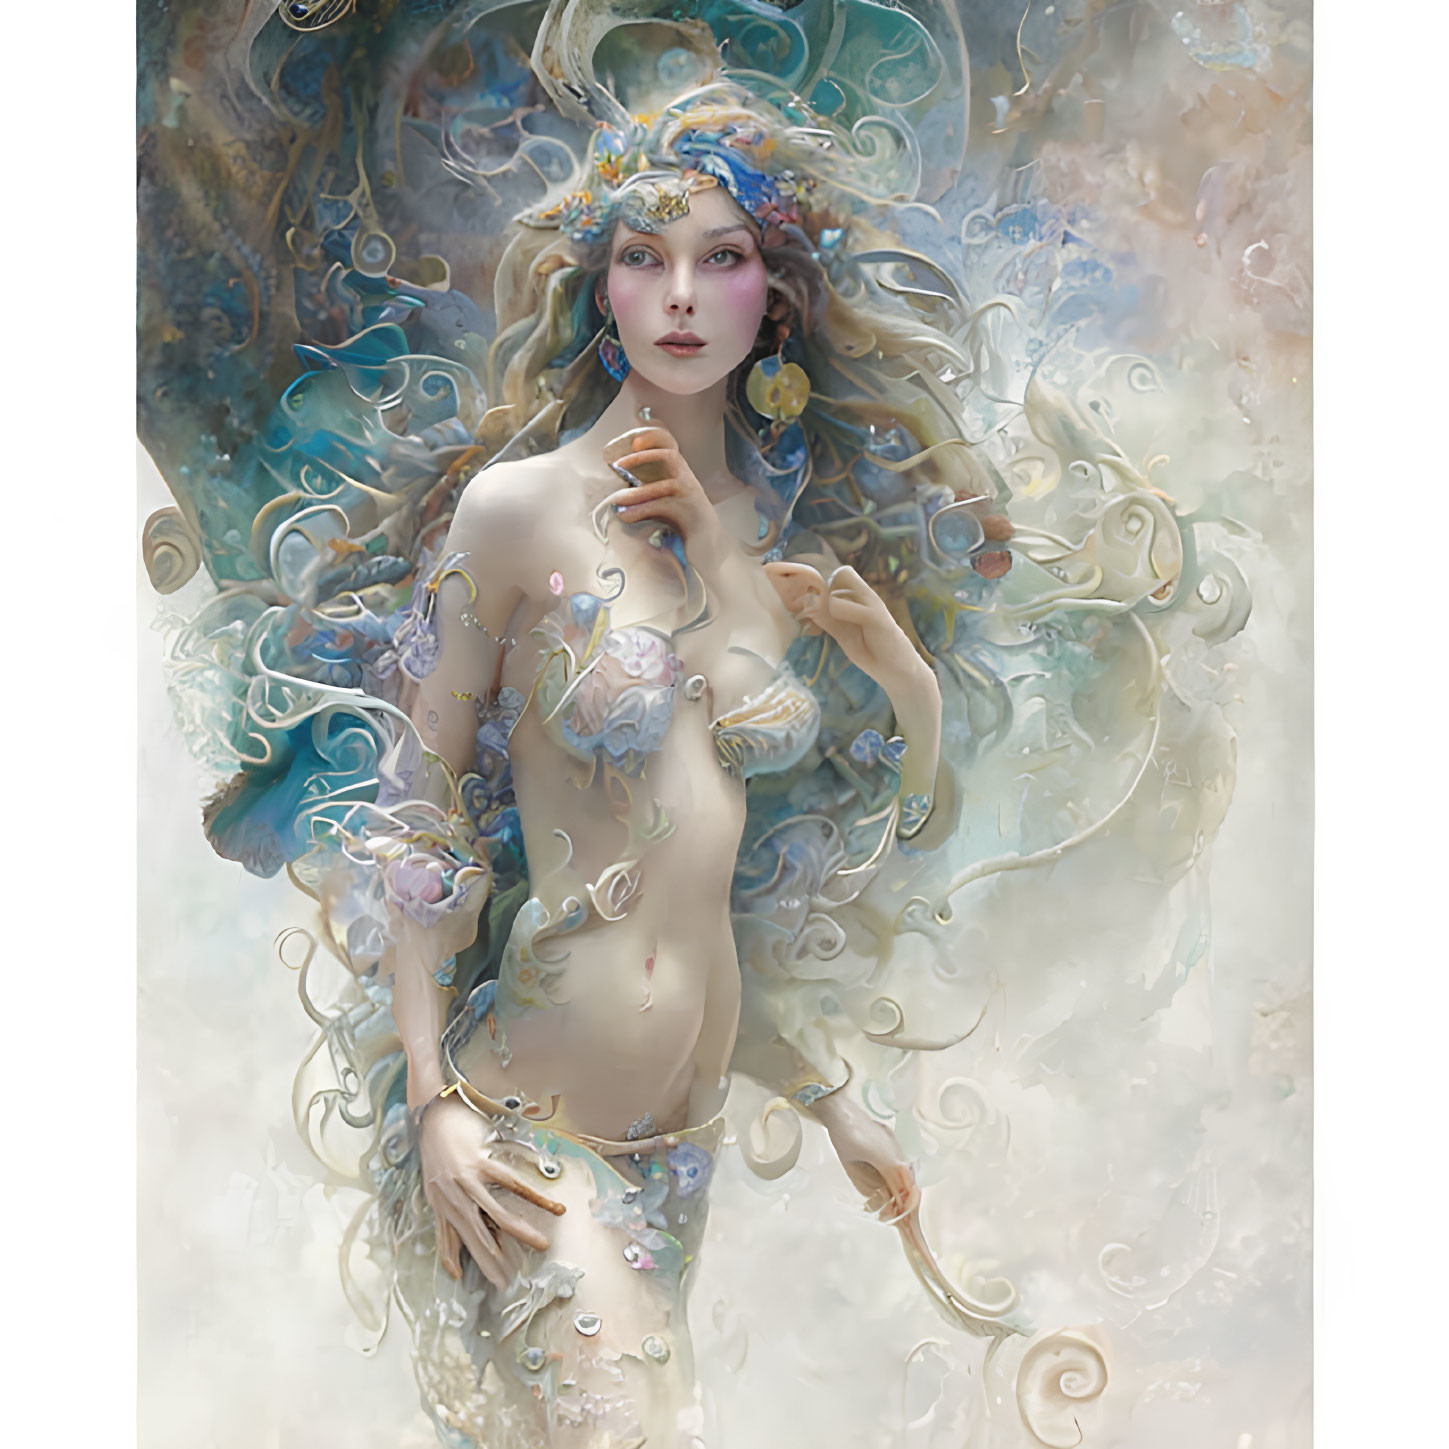 Intricate female figure with ornate headpiece and swirls in dreamlike setting